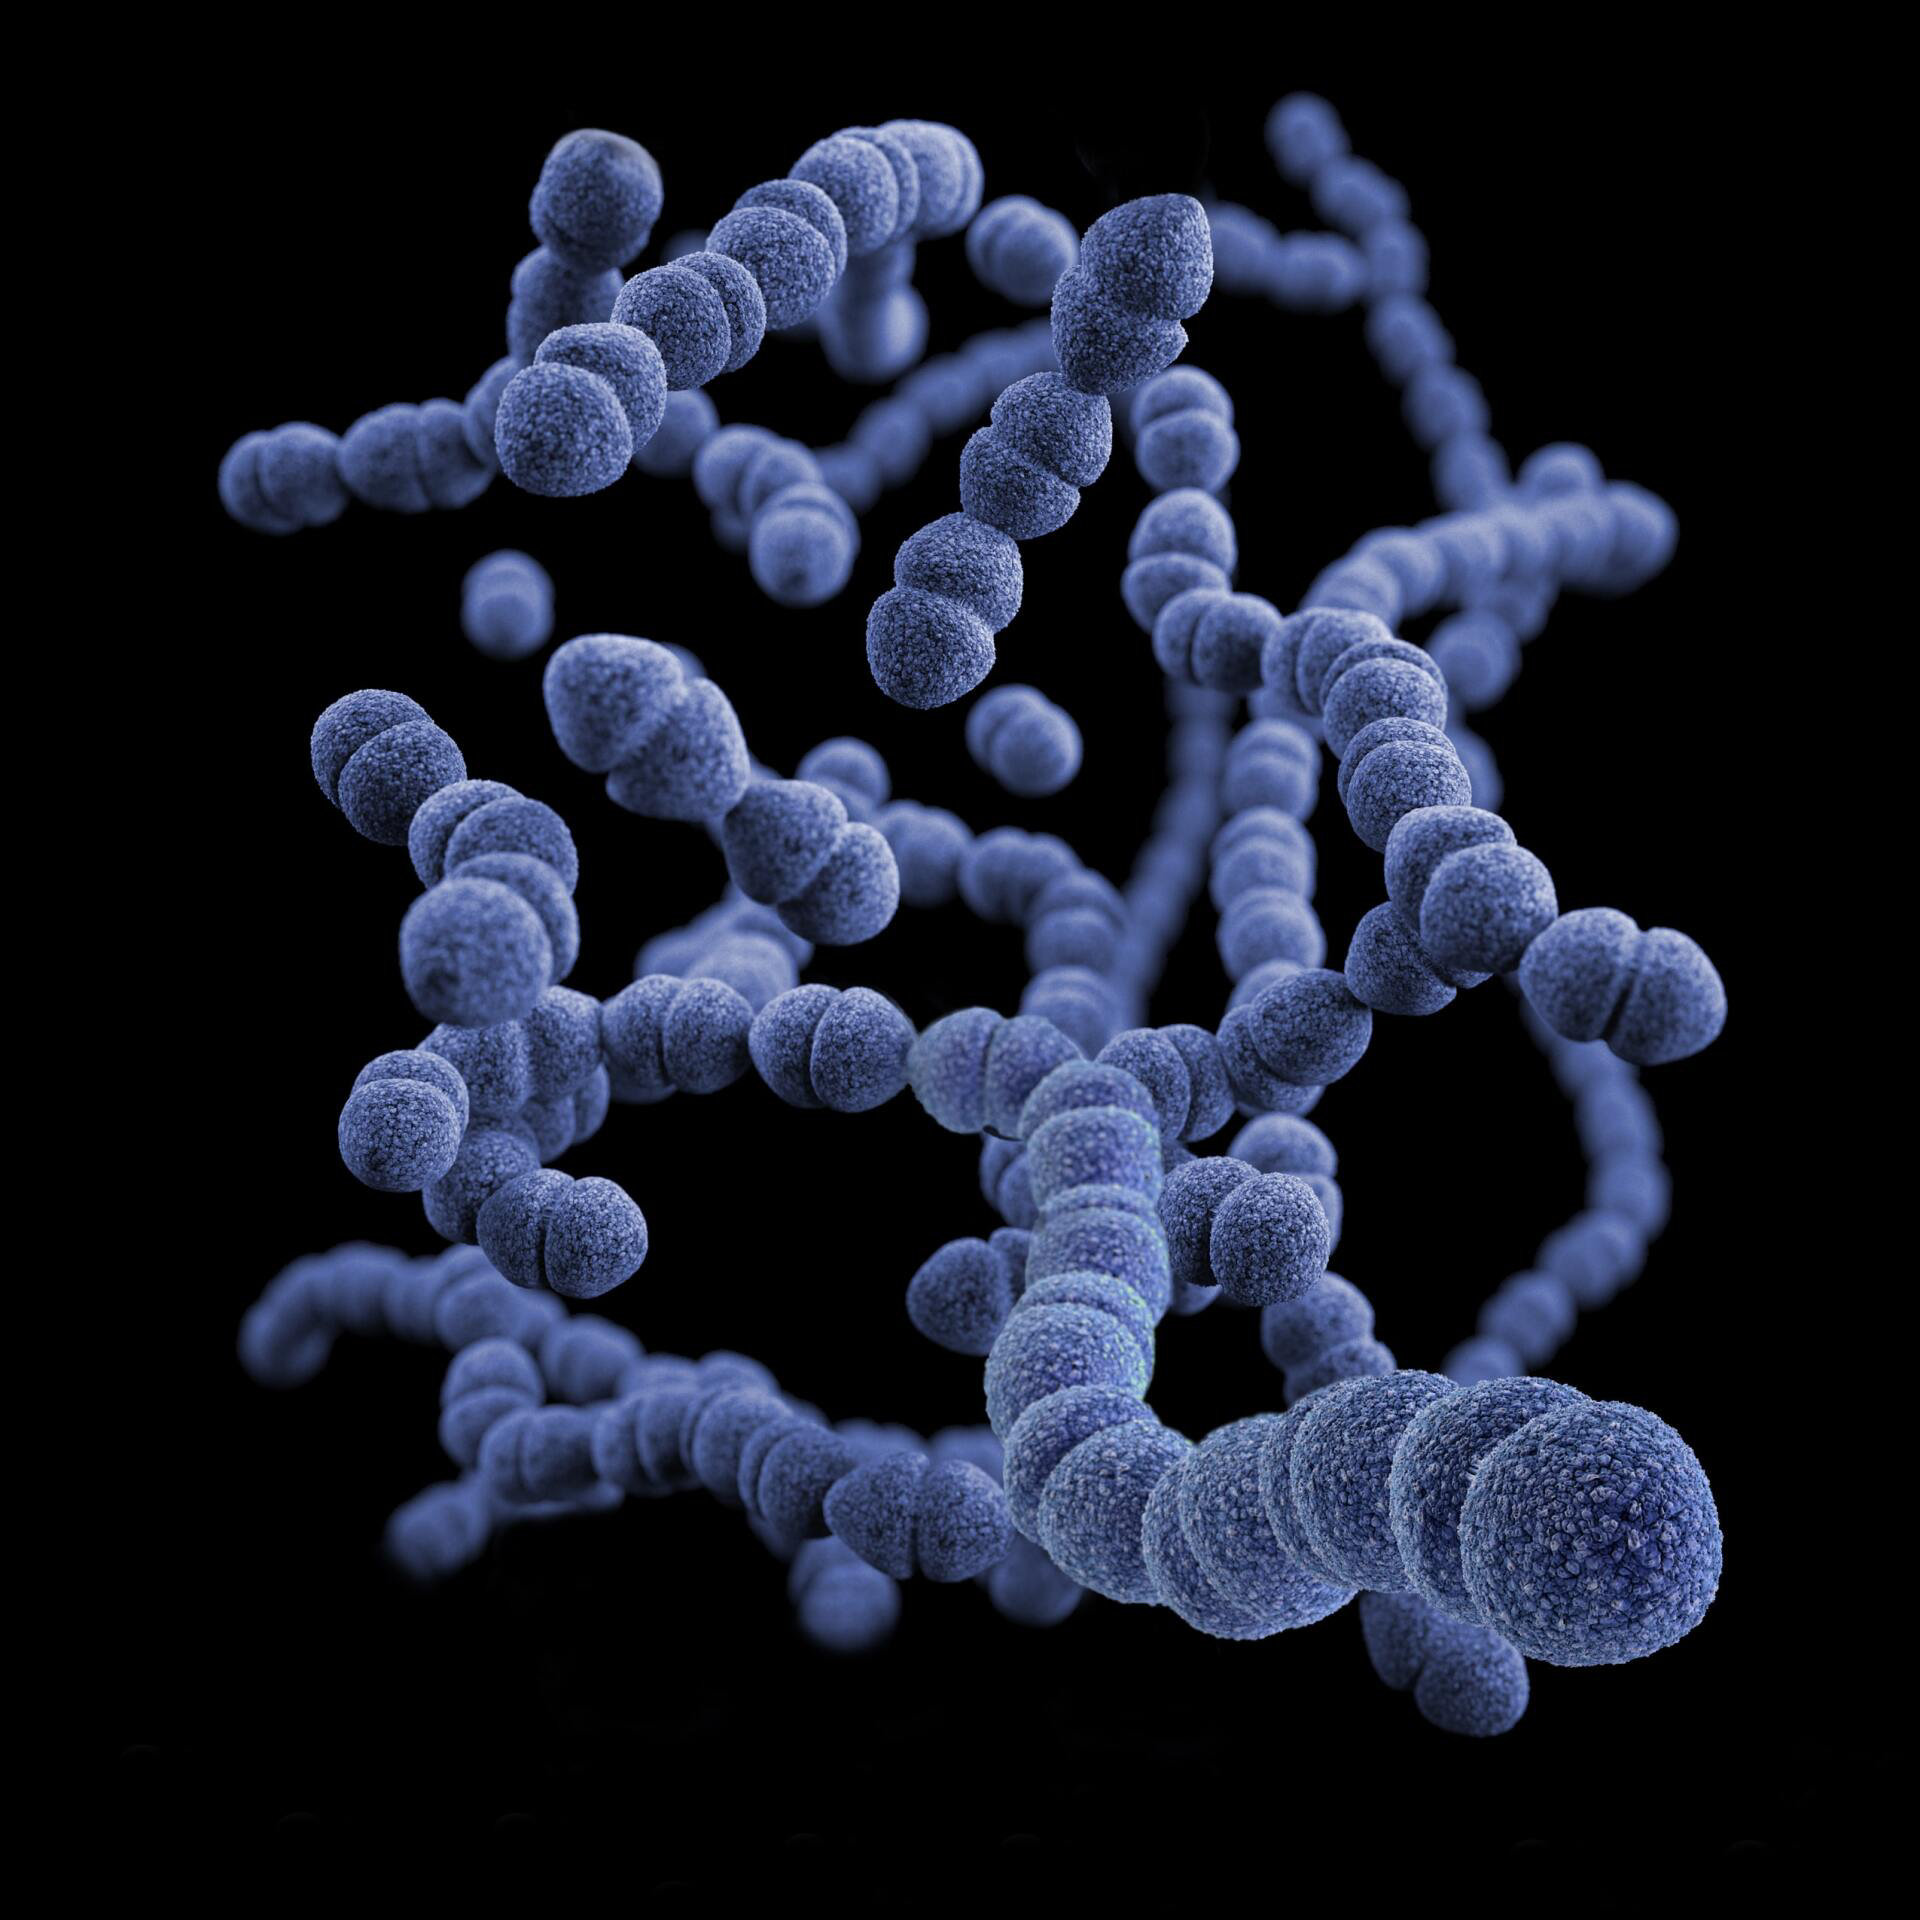 Bacteria Image